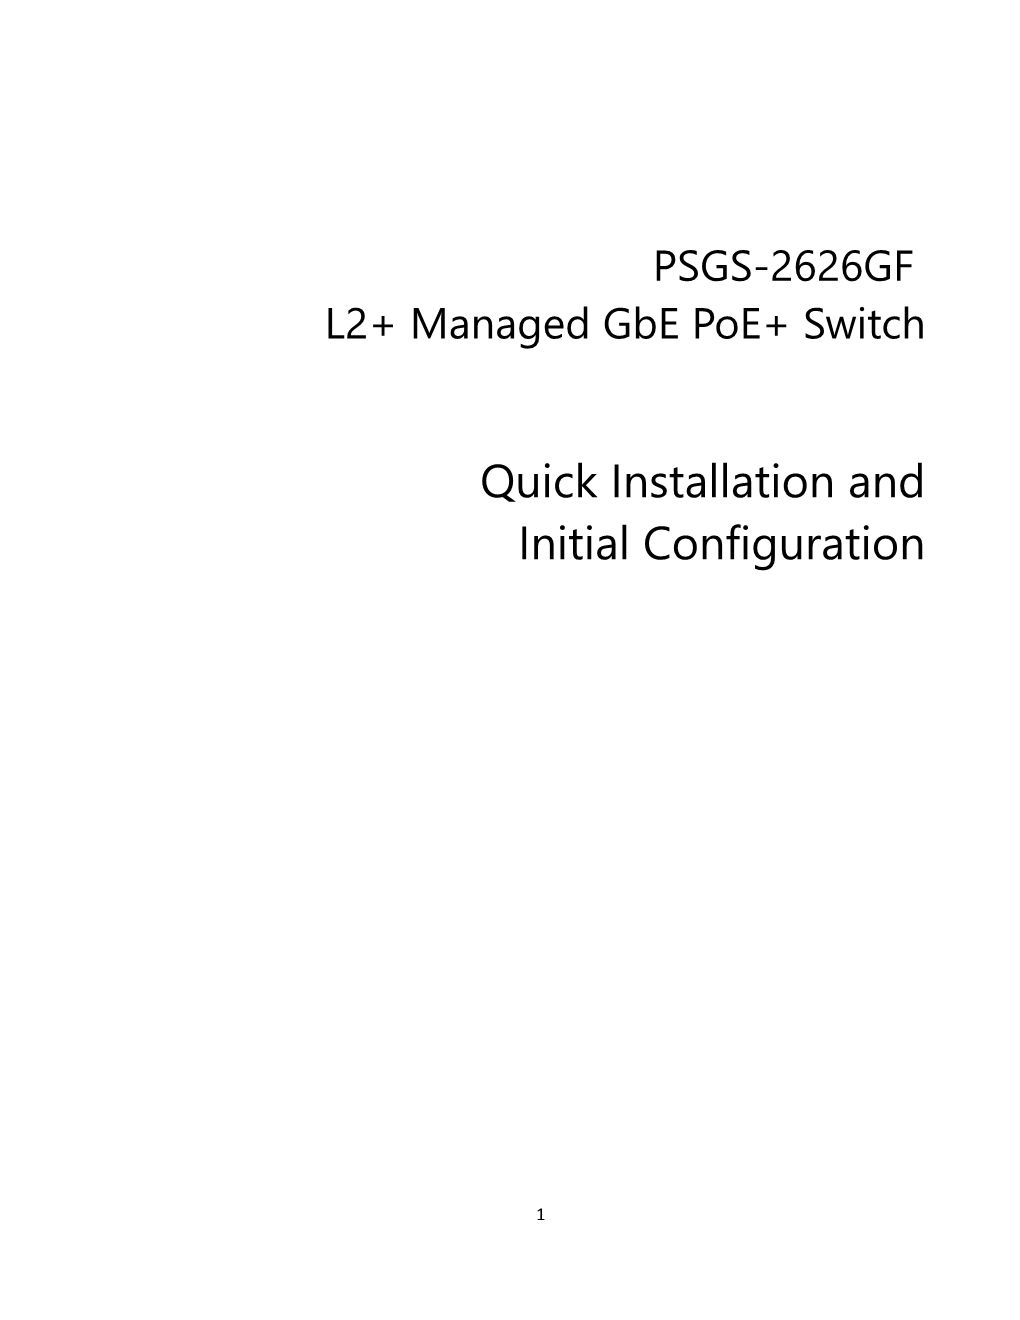 L2+Managed Gbepoe+ Switch